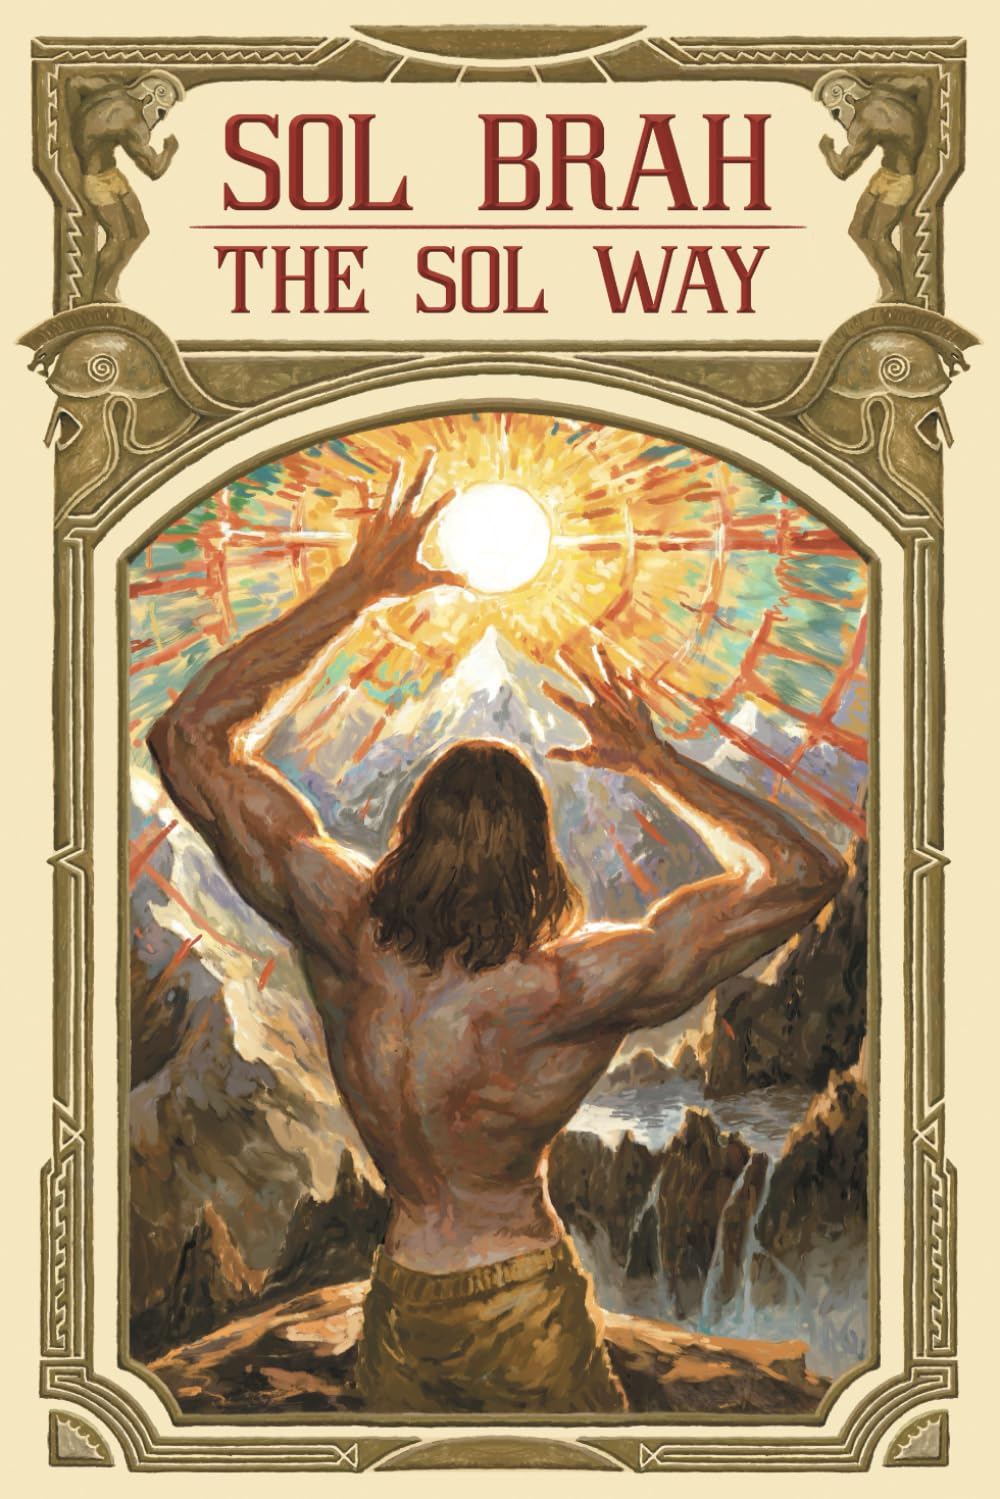 The Sol Way